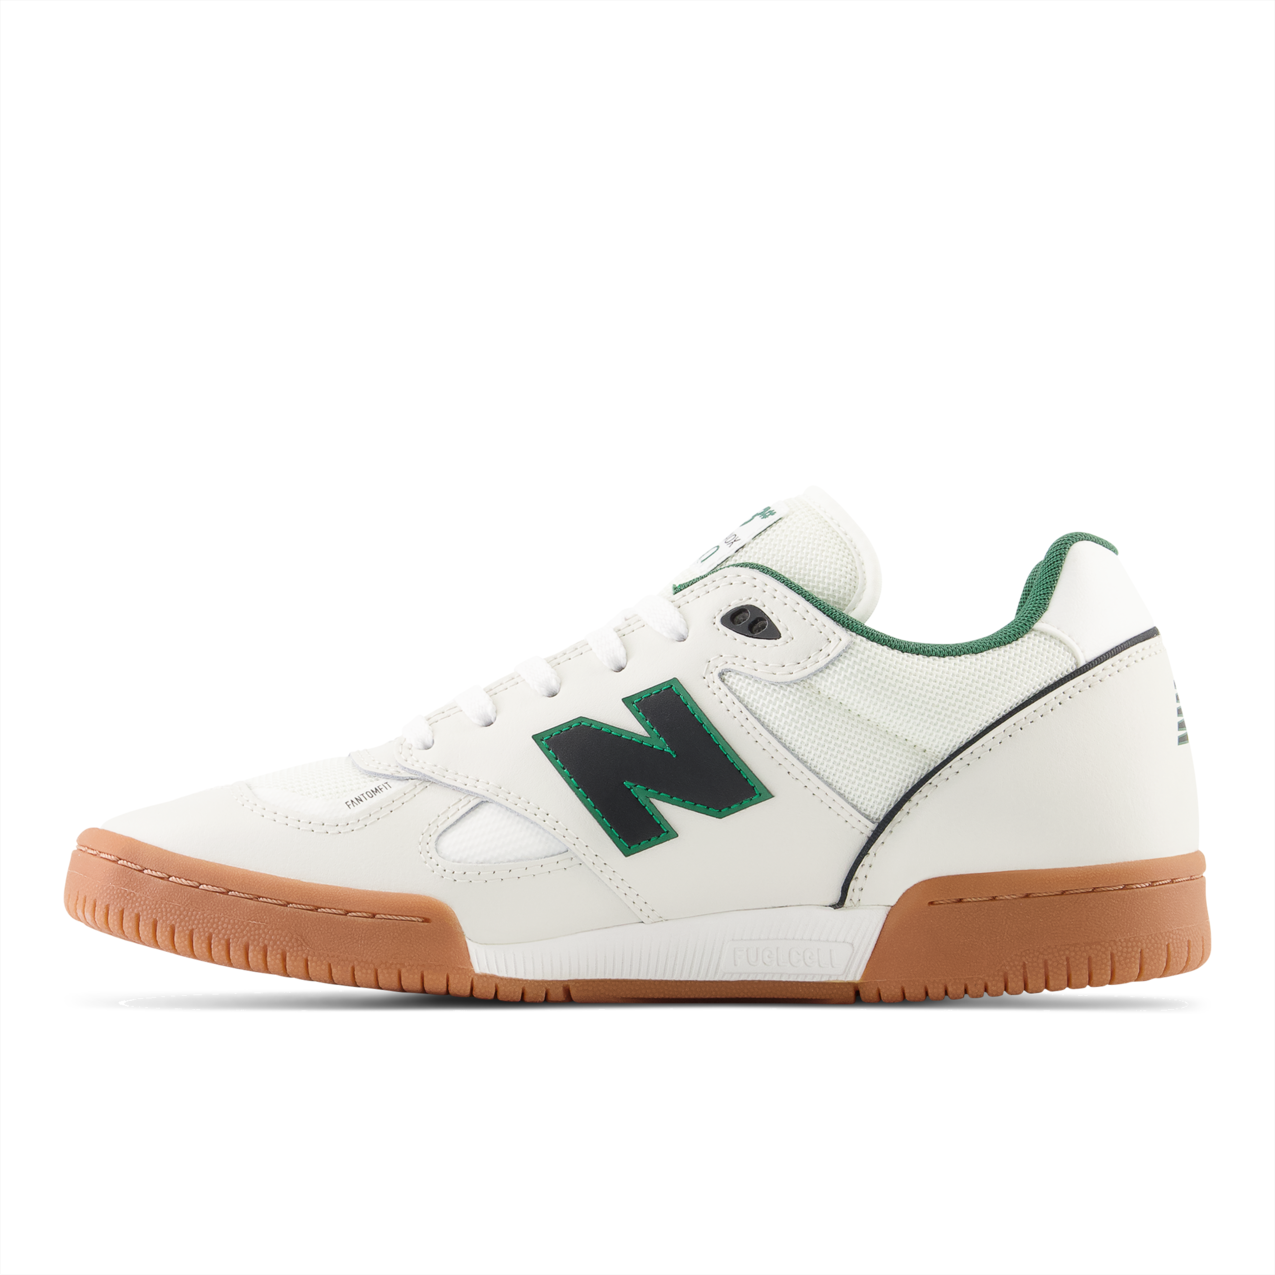 New Balance Numeric Men's Tom Knox 600 White Green Shoes